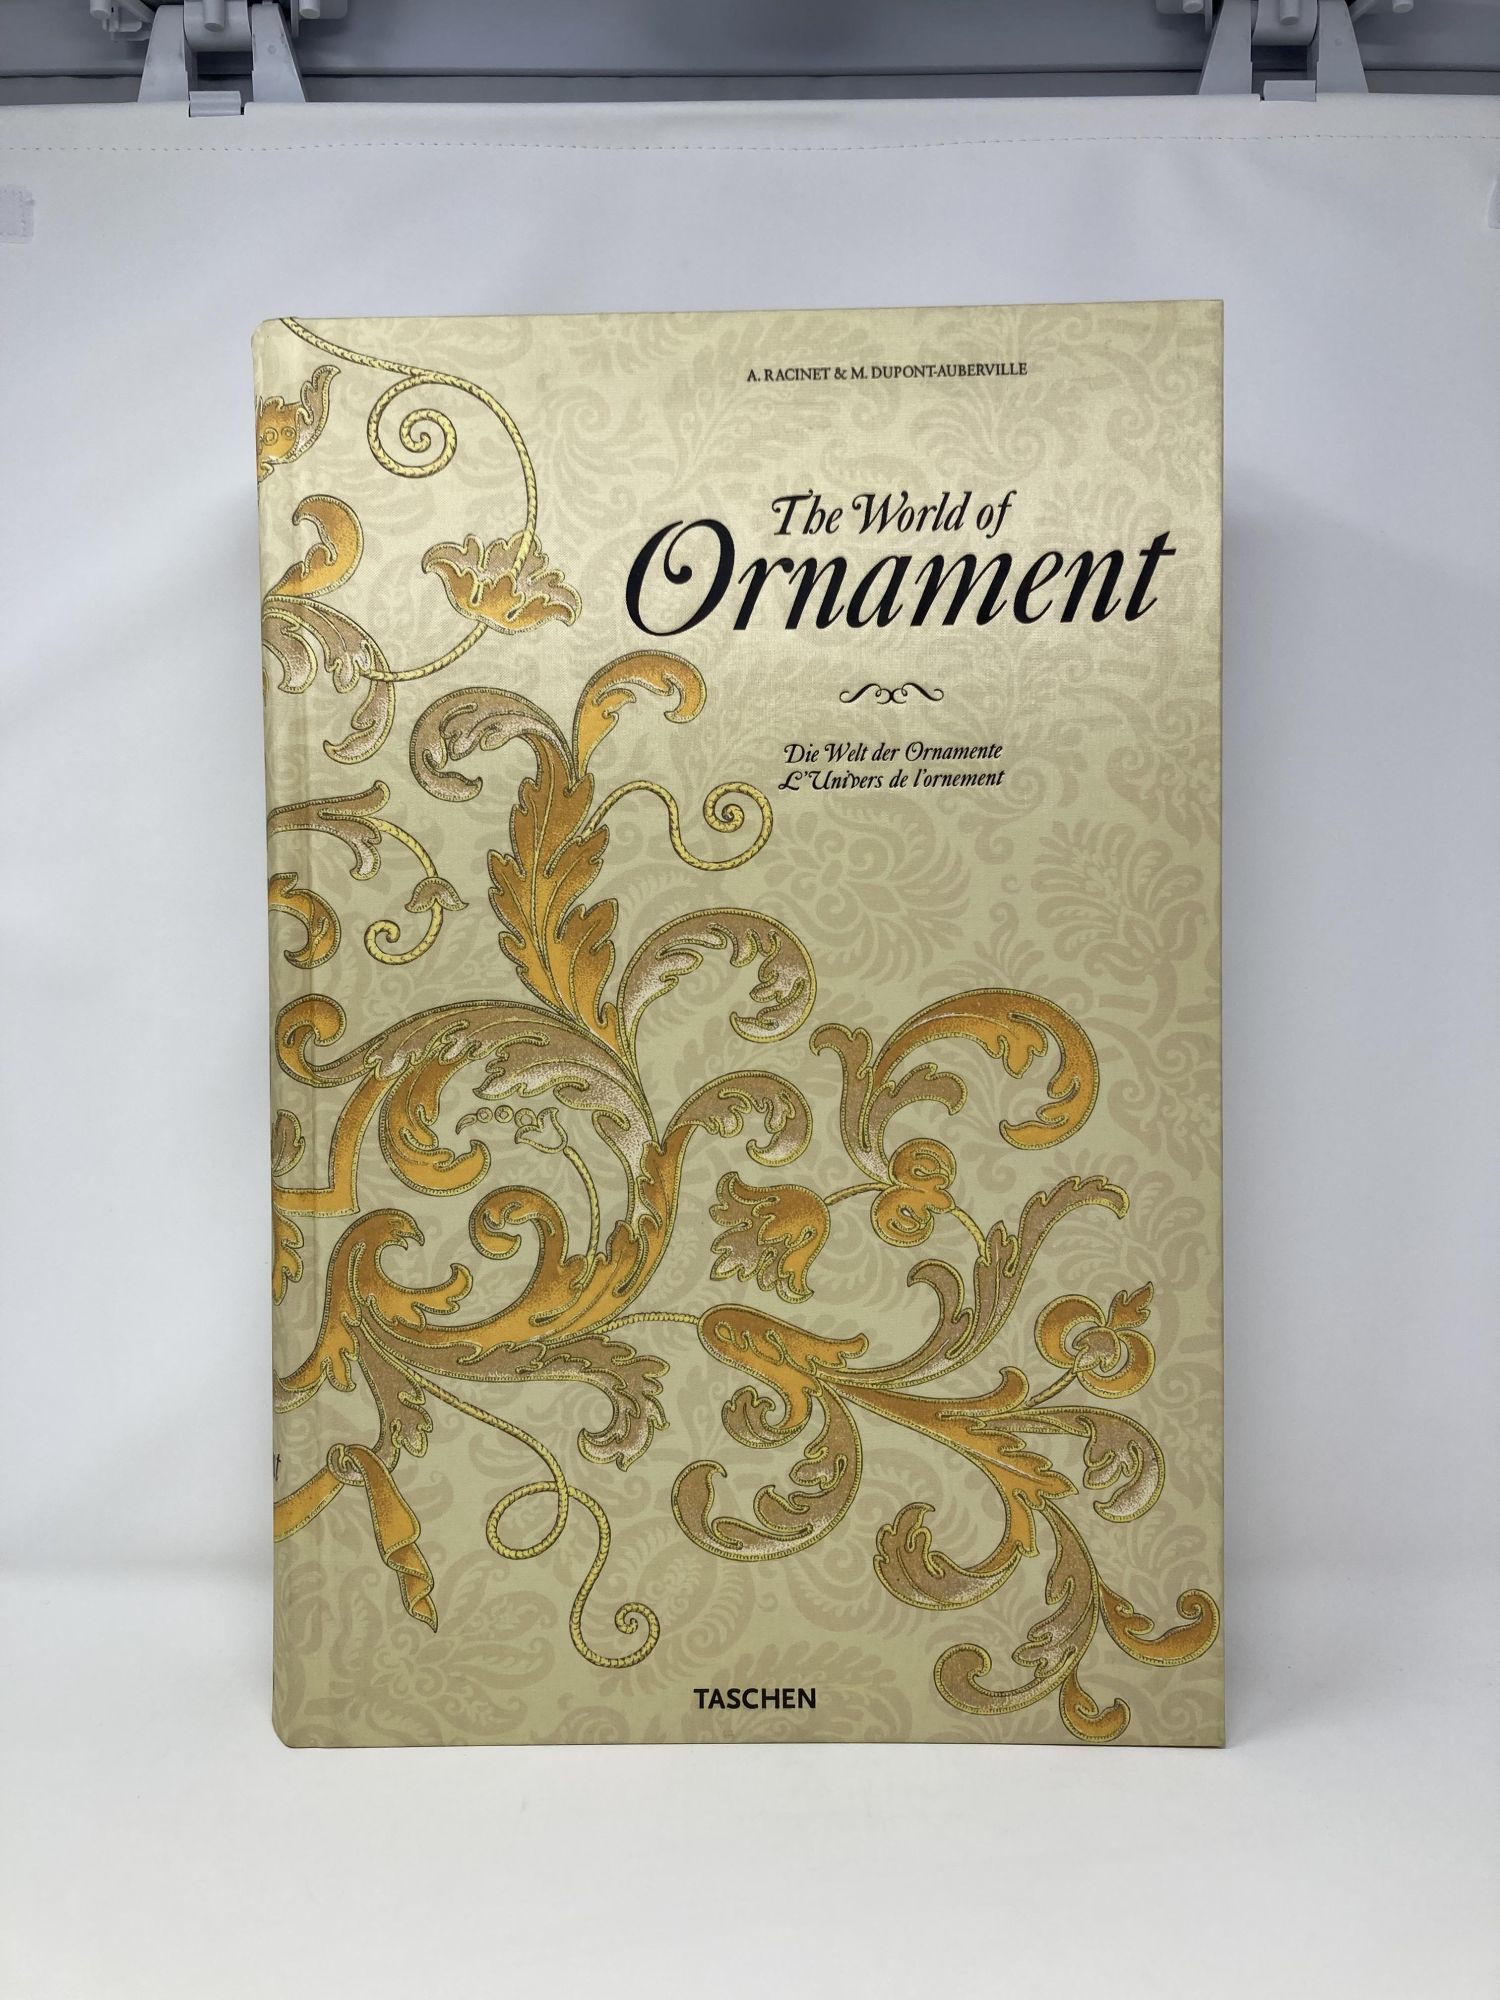 The World of Ornament by David Batterham on Sag Harbor Books